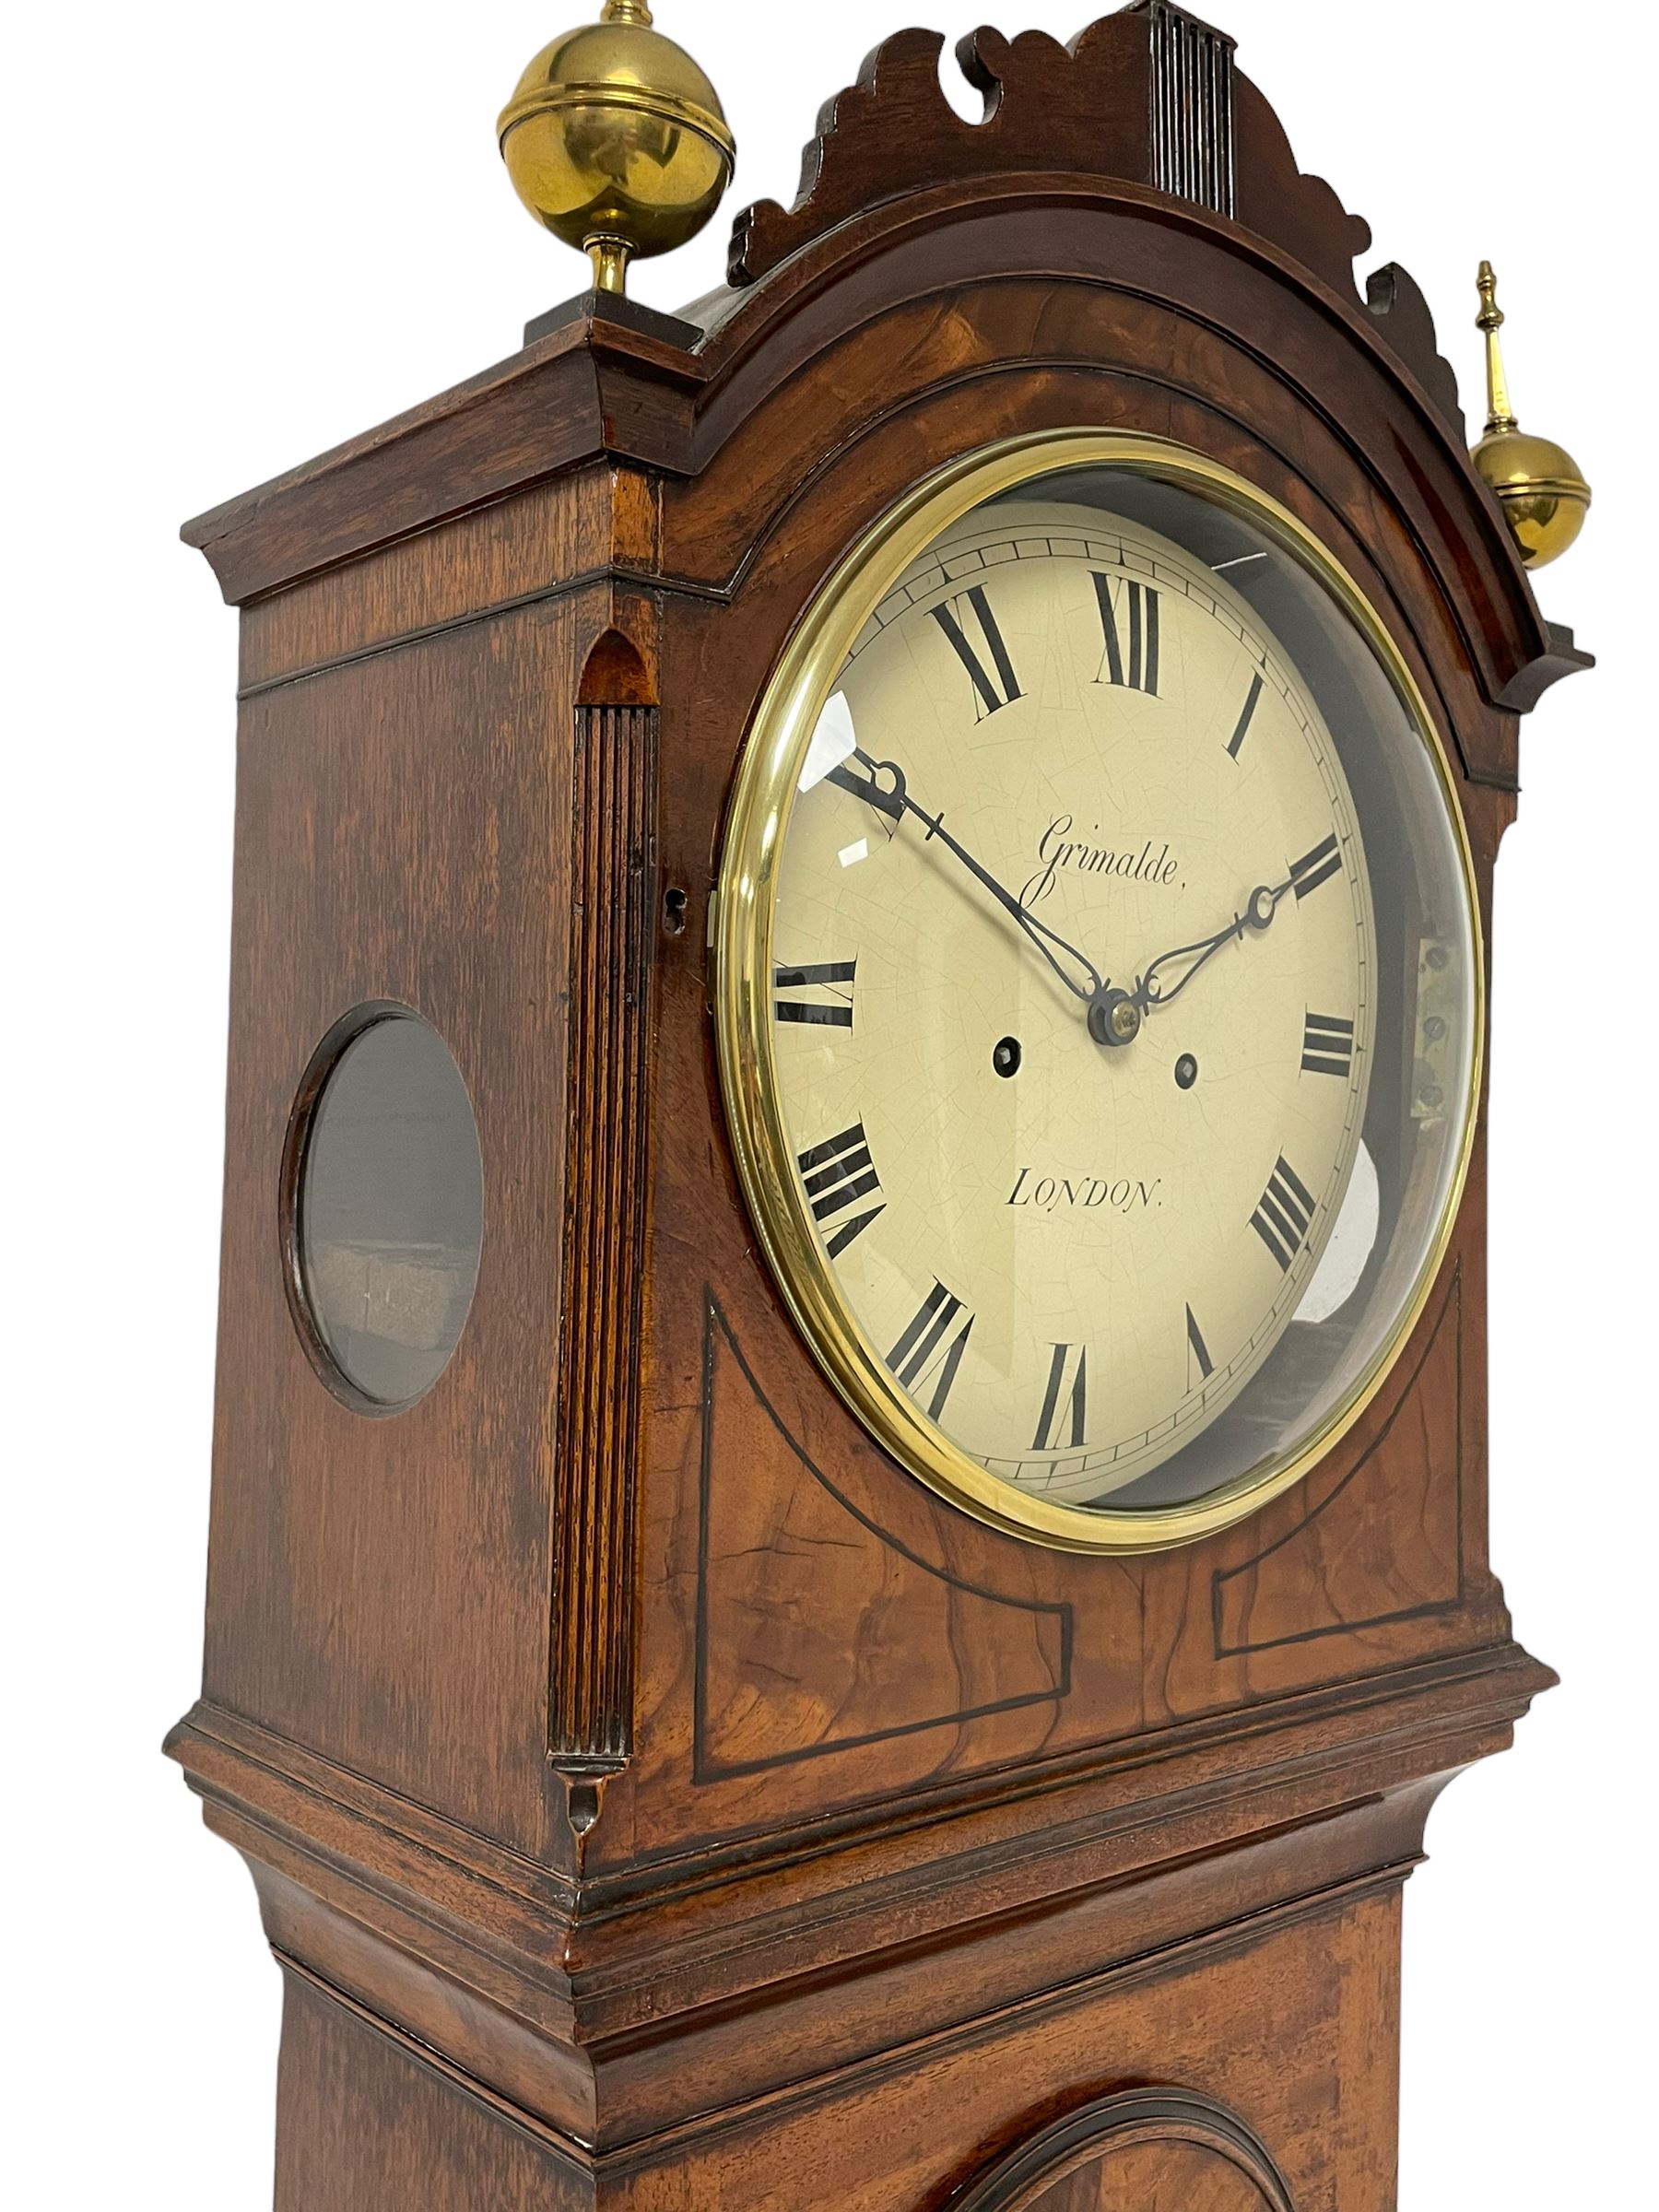 Grimalde of London - Mahogany 8-day longcase clock c1805 - Image 7 of 14